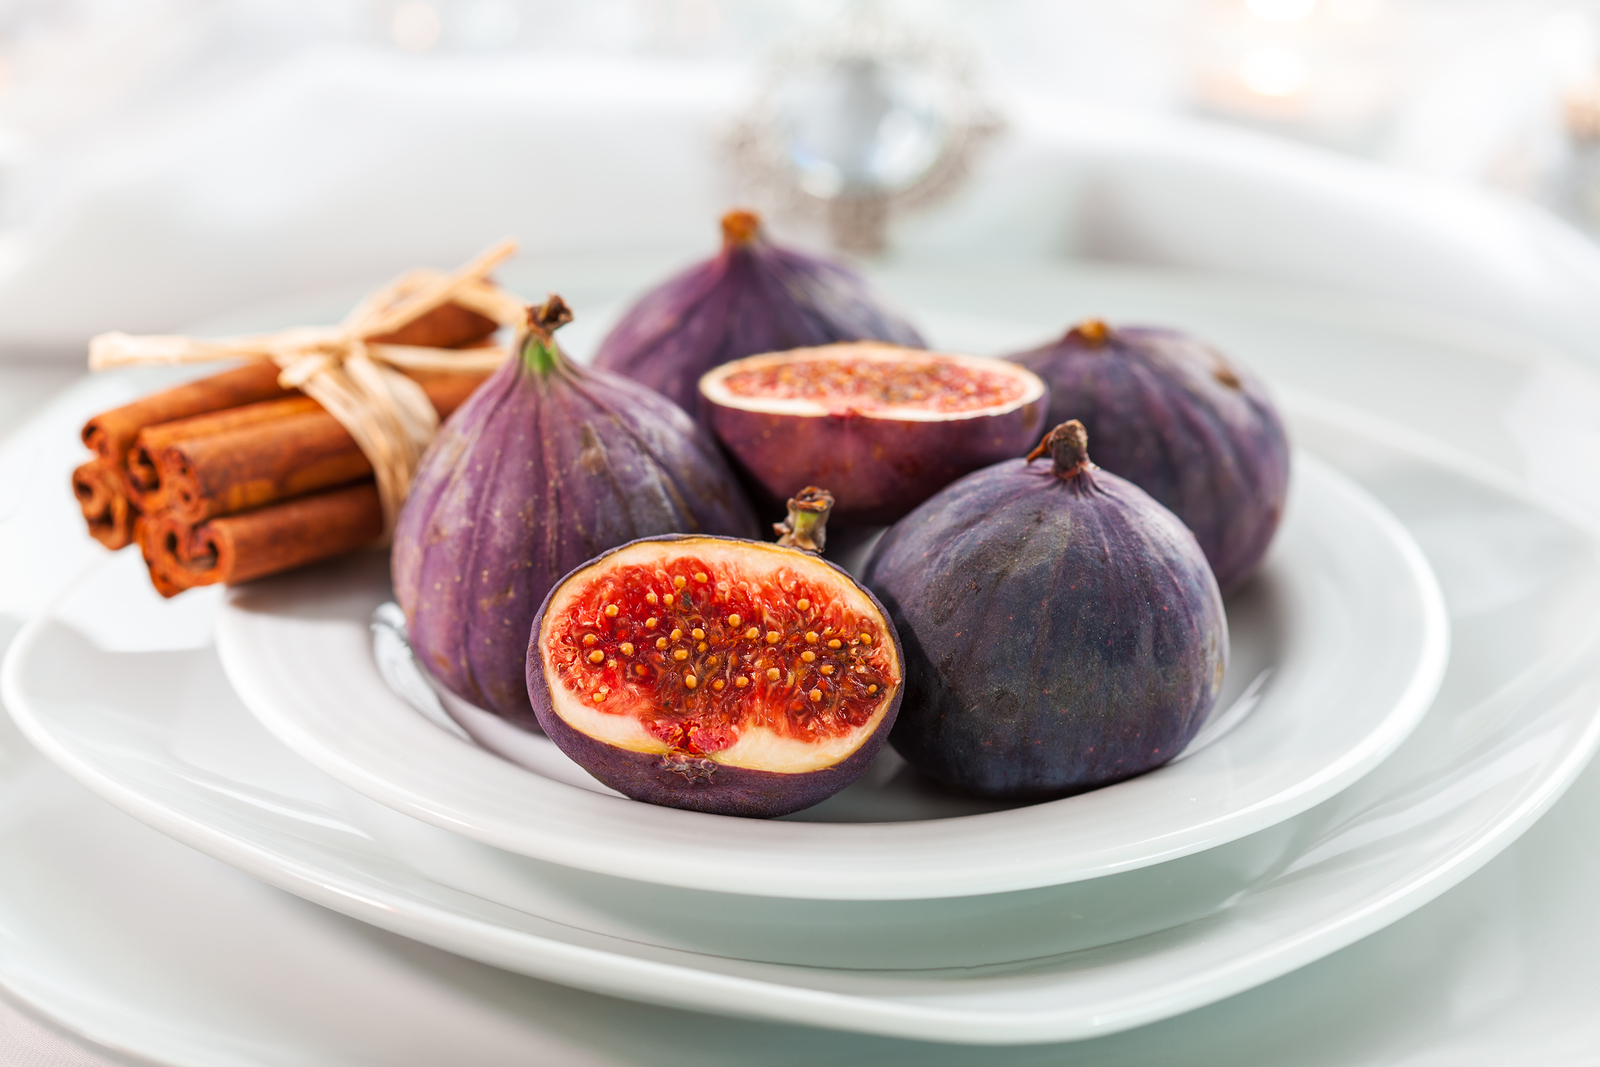 Useful properties of figs